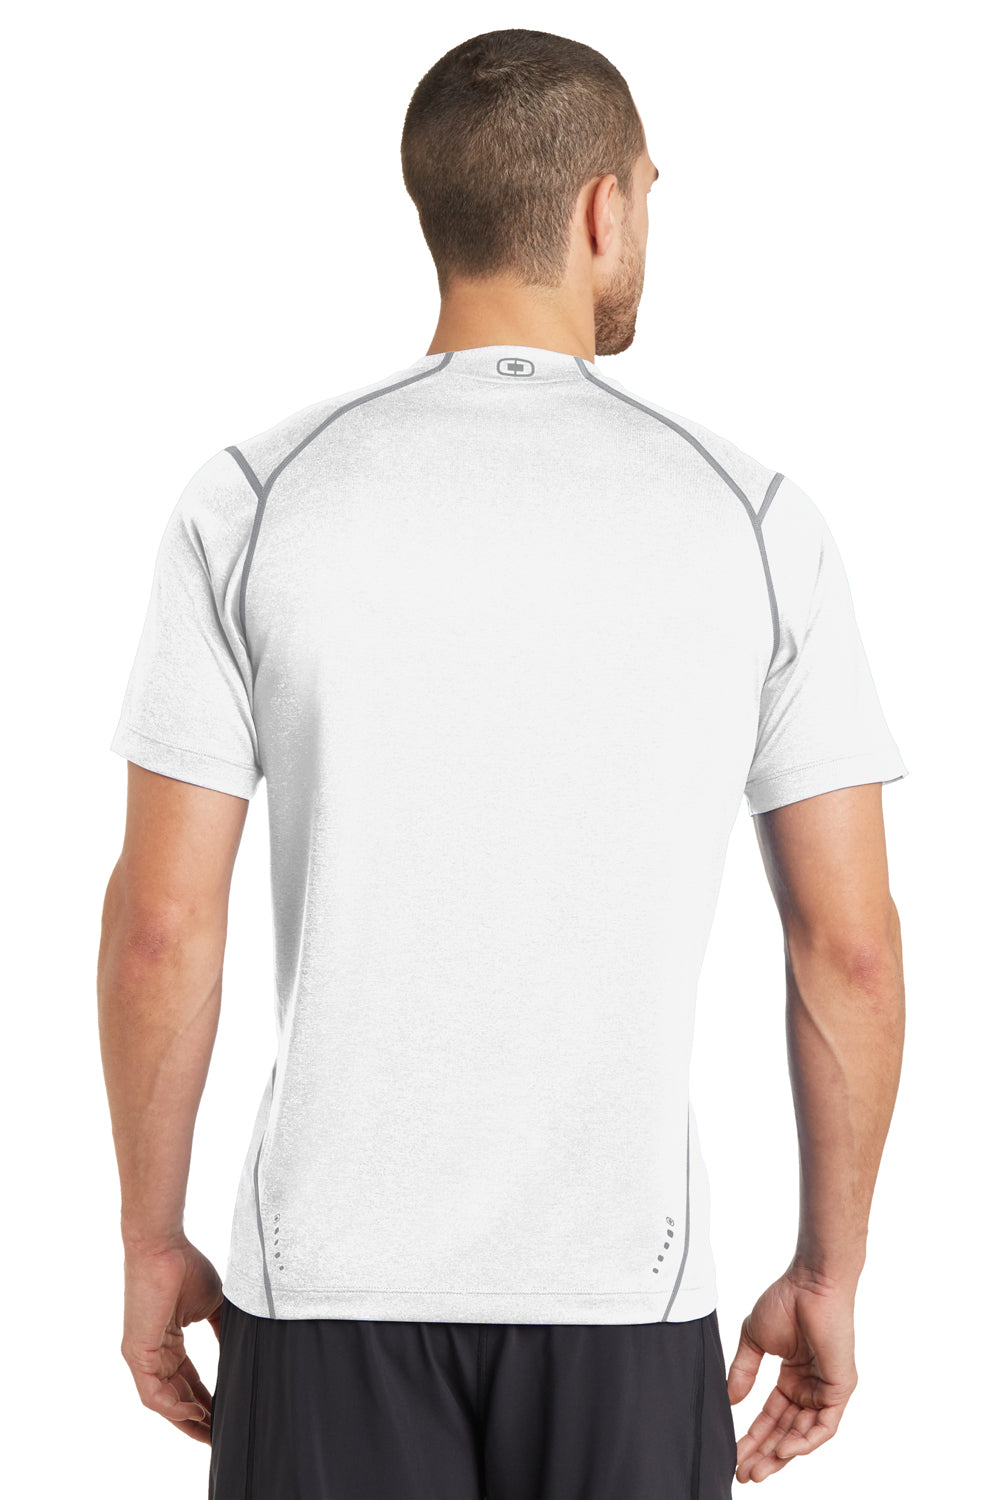 Ogio OE320 Mens Endurance Pulse Jersey Moisture Wicking Short Sleeve Crewneck T-Shirt White Back